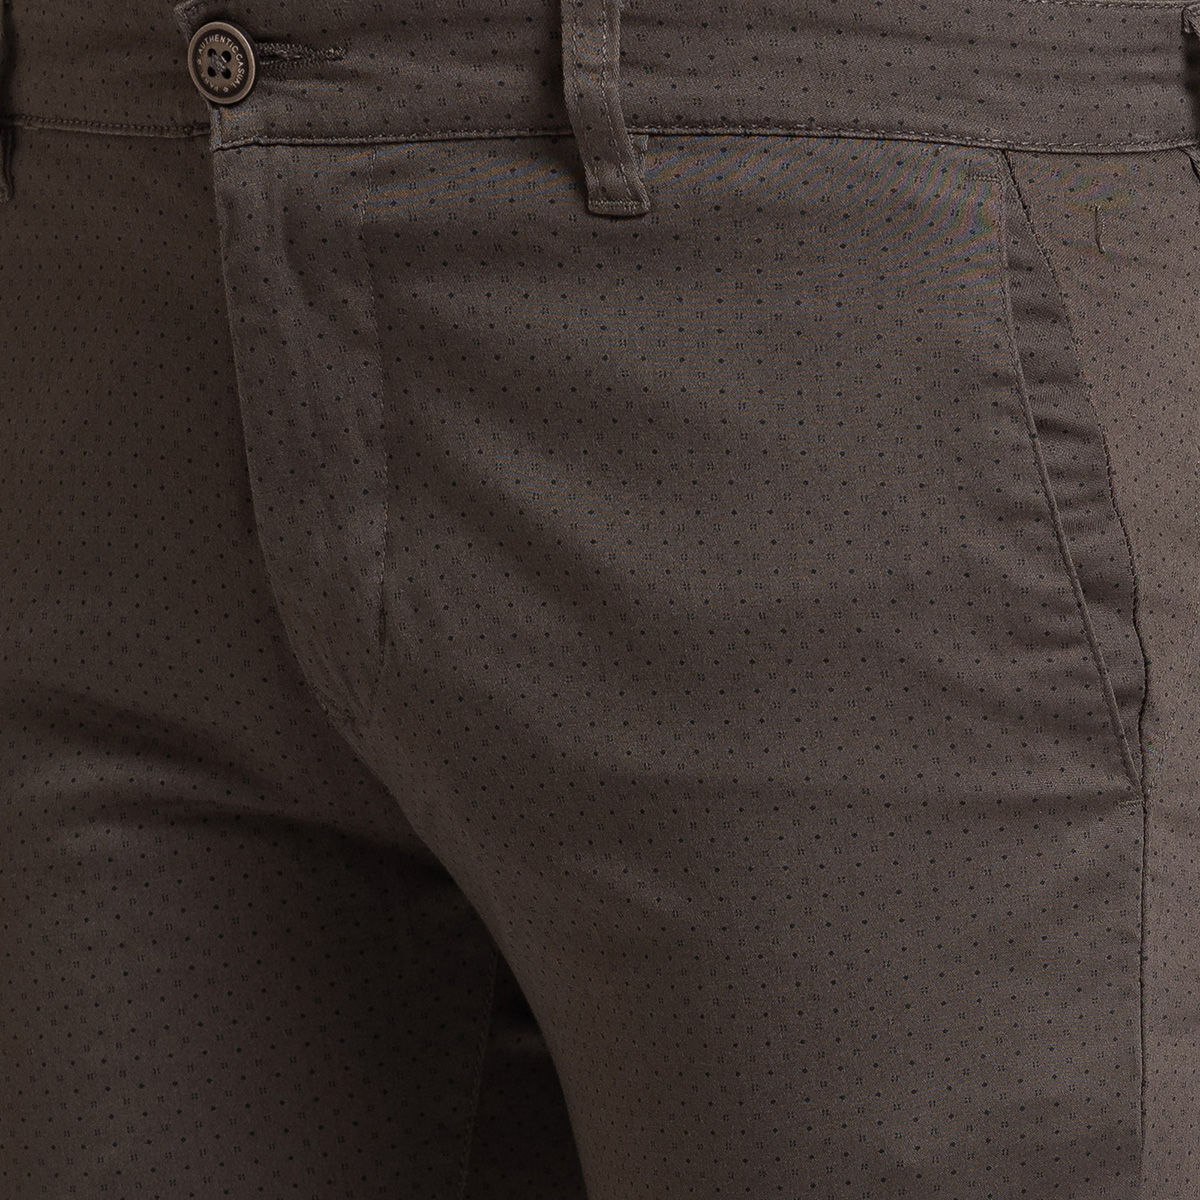 Buy Parx Men's Tapered Pants (XMTX03422-H4_Medium Khaki at Amazon.in